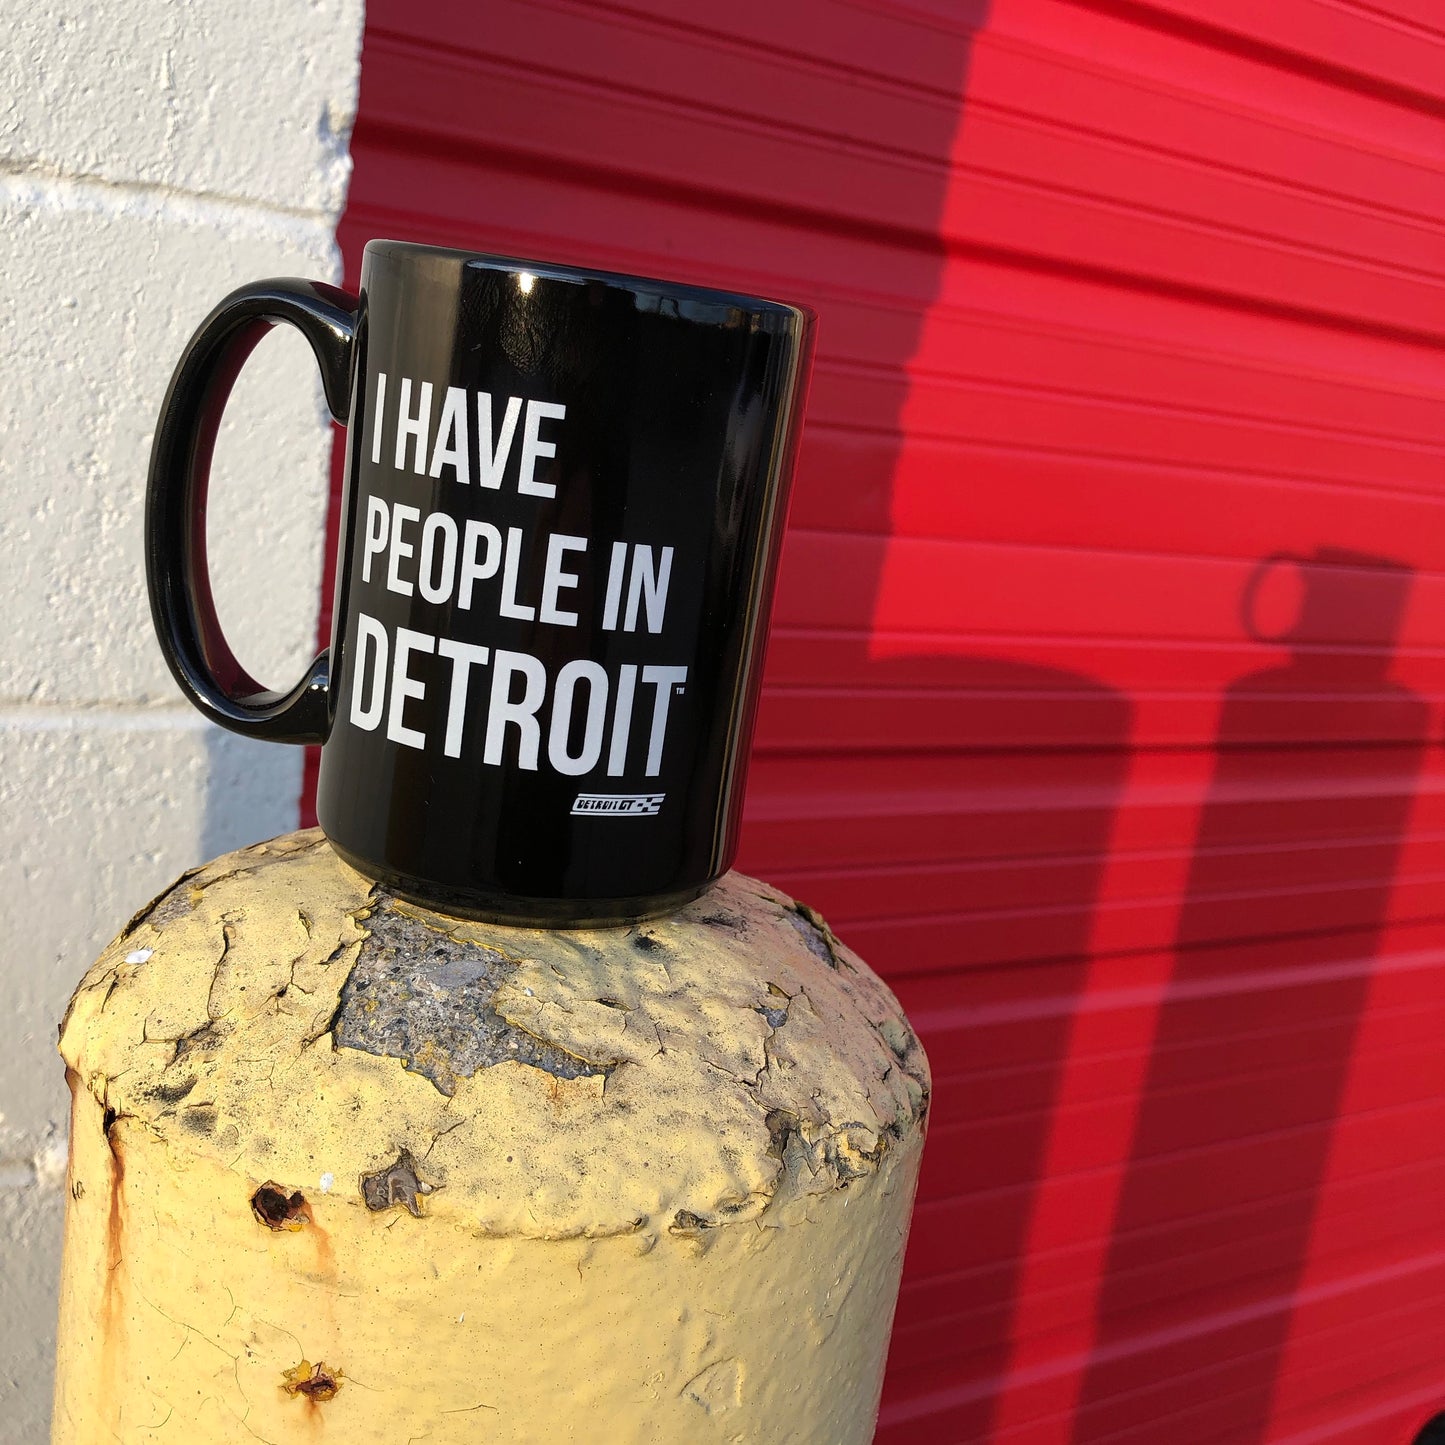 I Have People In Detroit - 15oz Ceramic Mug